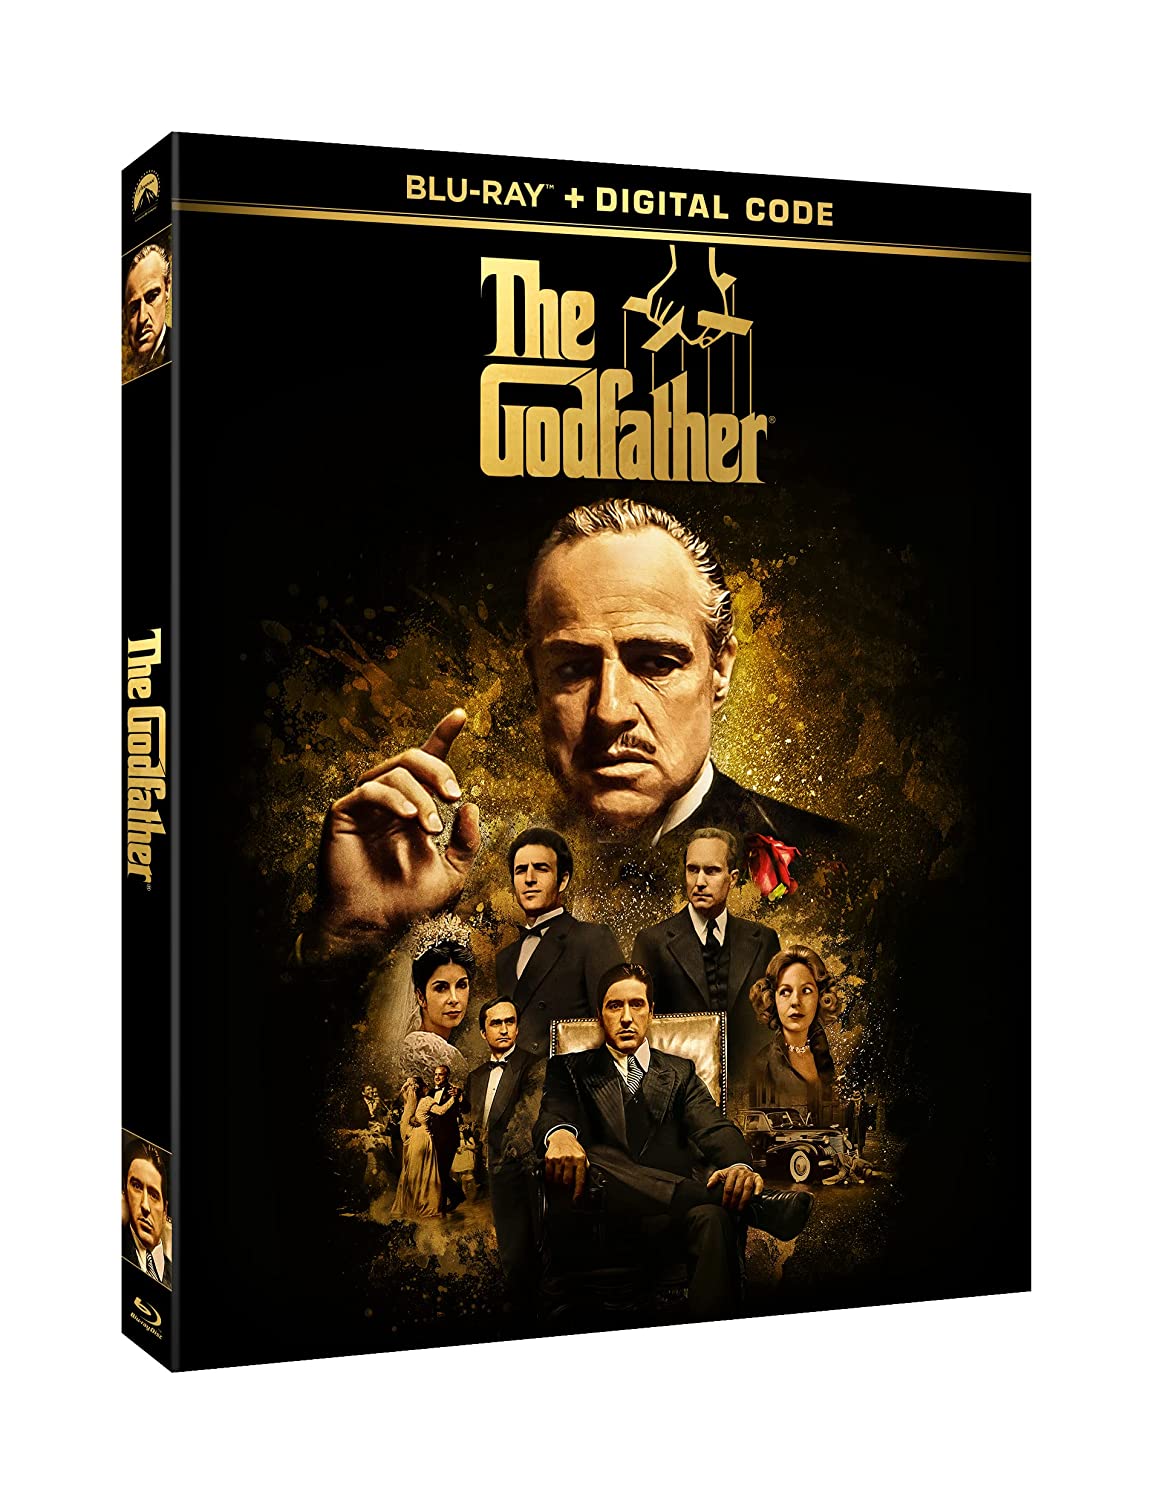 The Godfather (Blu-ray + Digital Code)